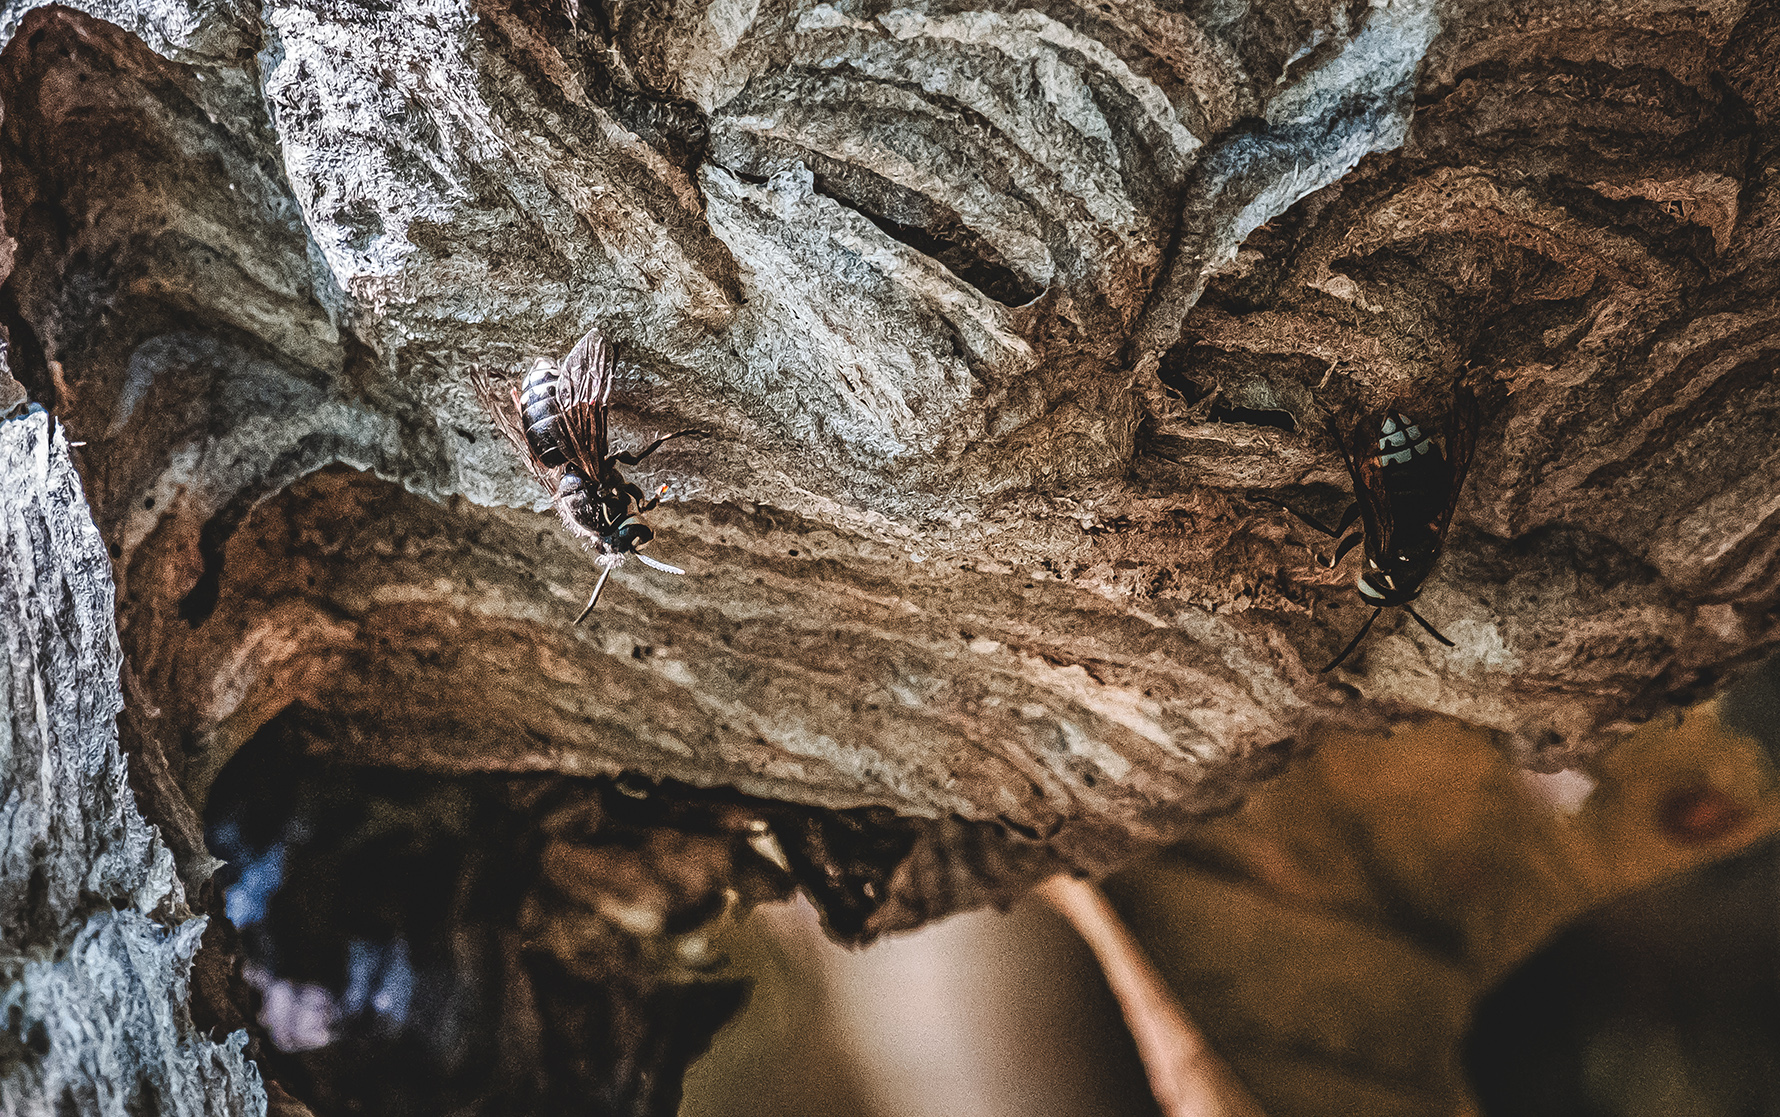 Underside Of A Hornet Hive. Photograph Art Print
by lovefi 